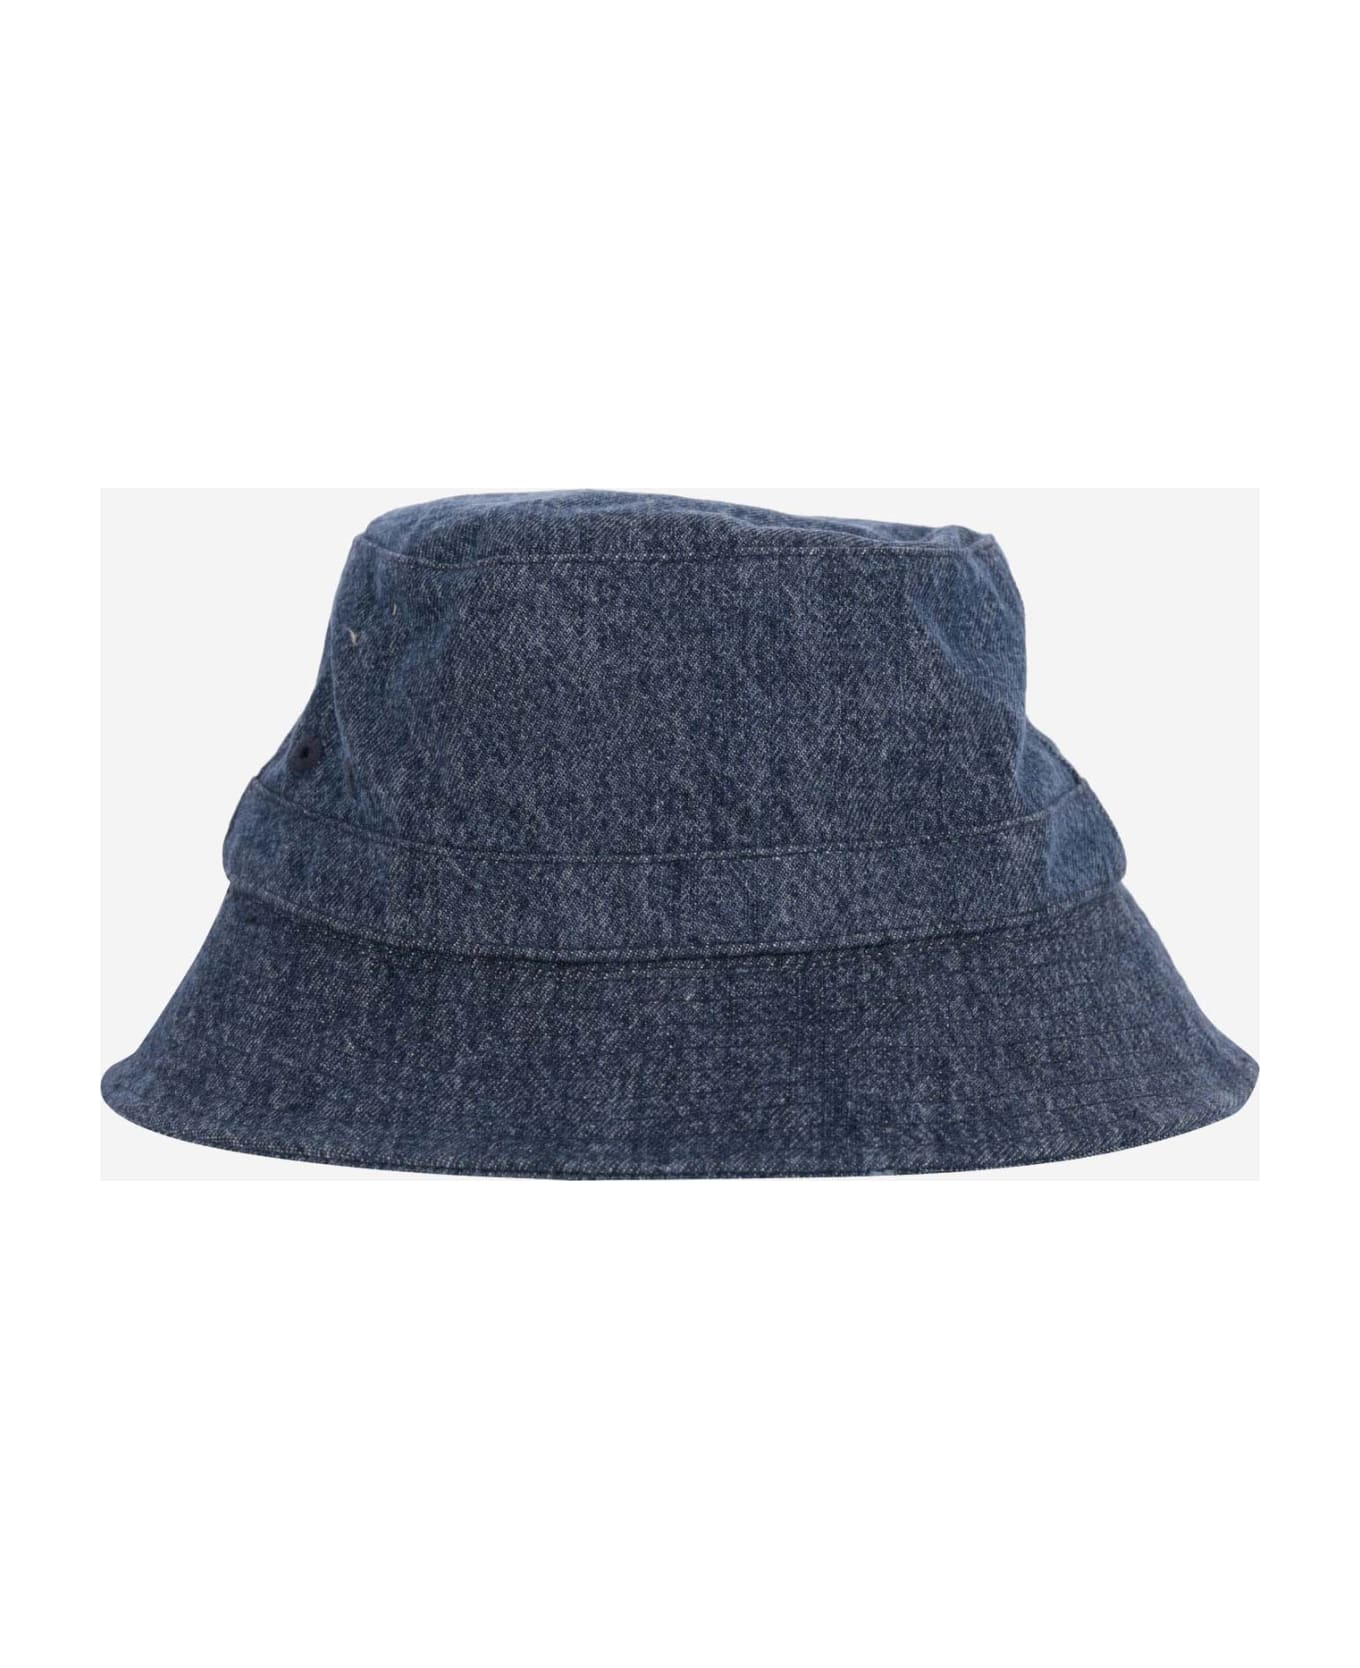 A.P.C. Denim Bucket Hat - Denim 帽子